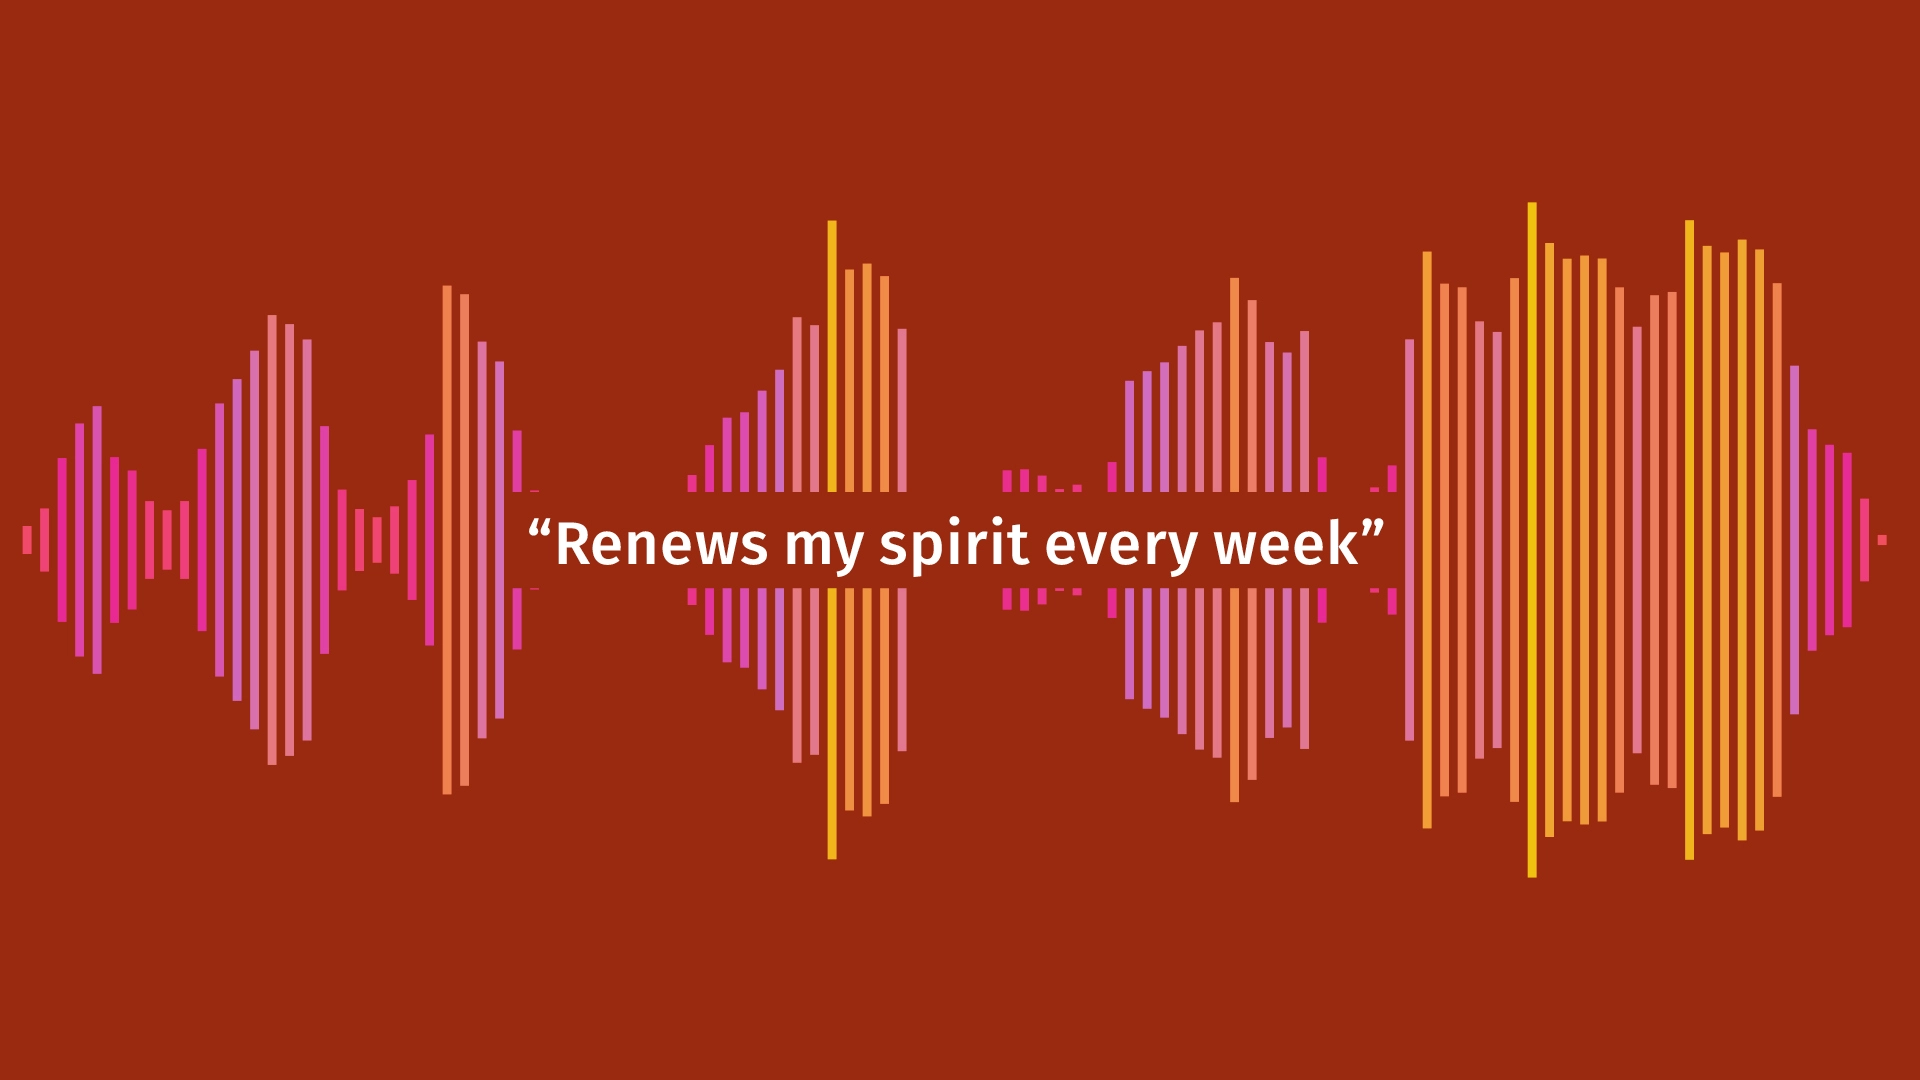 "Renews my spirit every week" quote banner